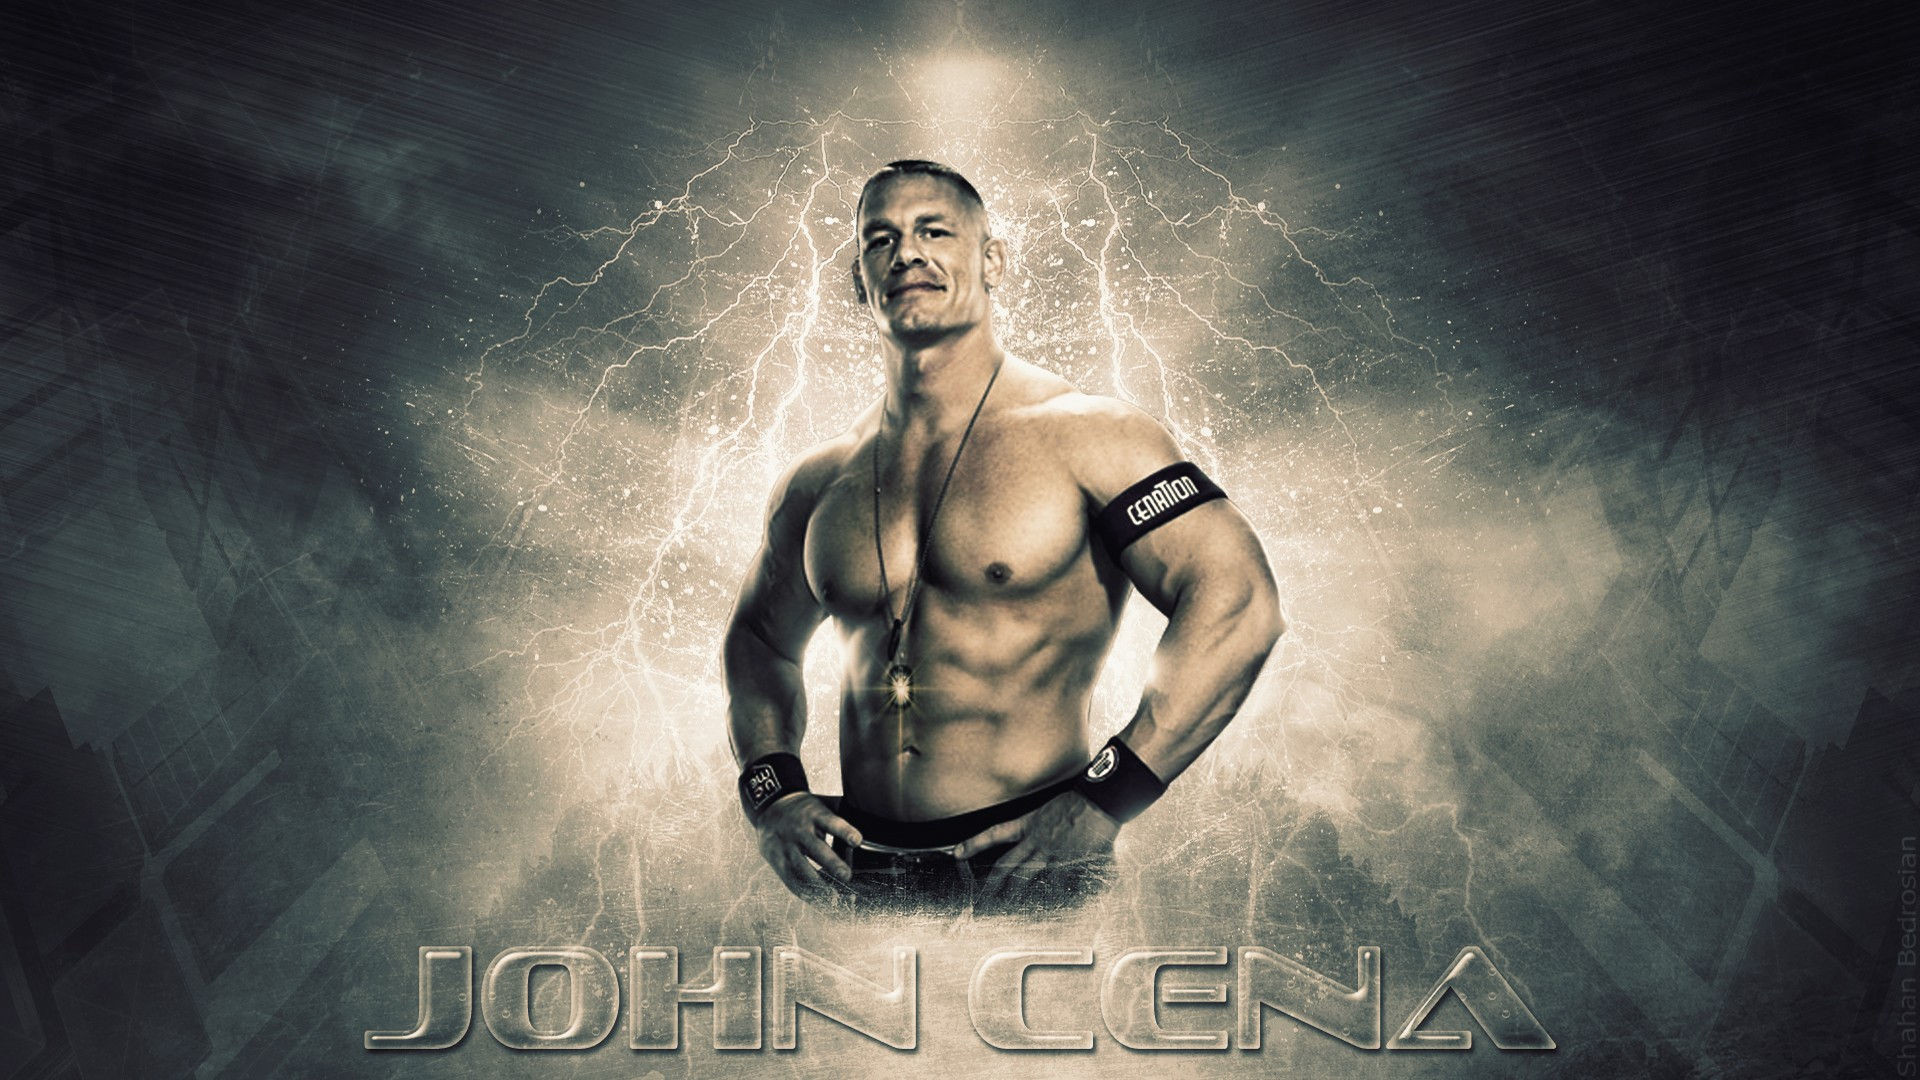 1920x1080 WWE Wrestler John Cena Body Fitness Photos